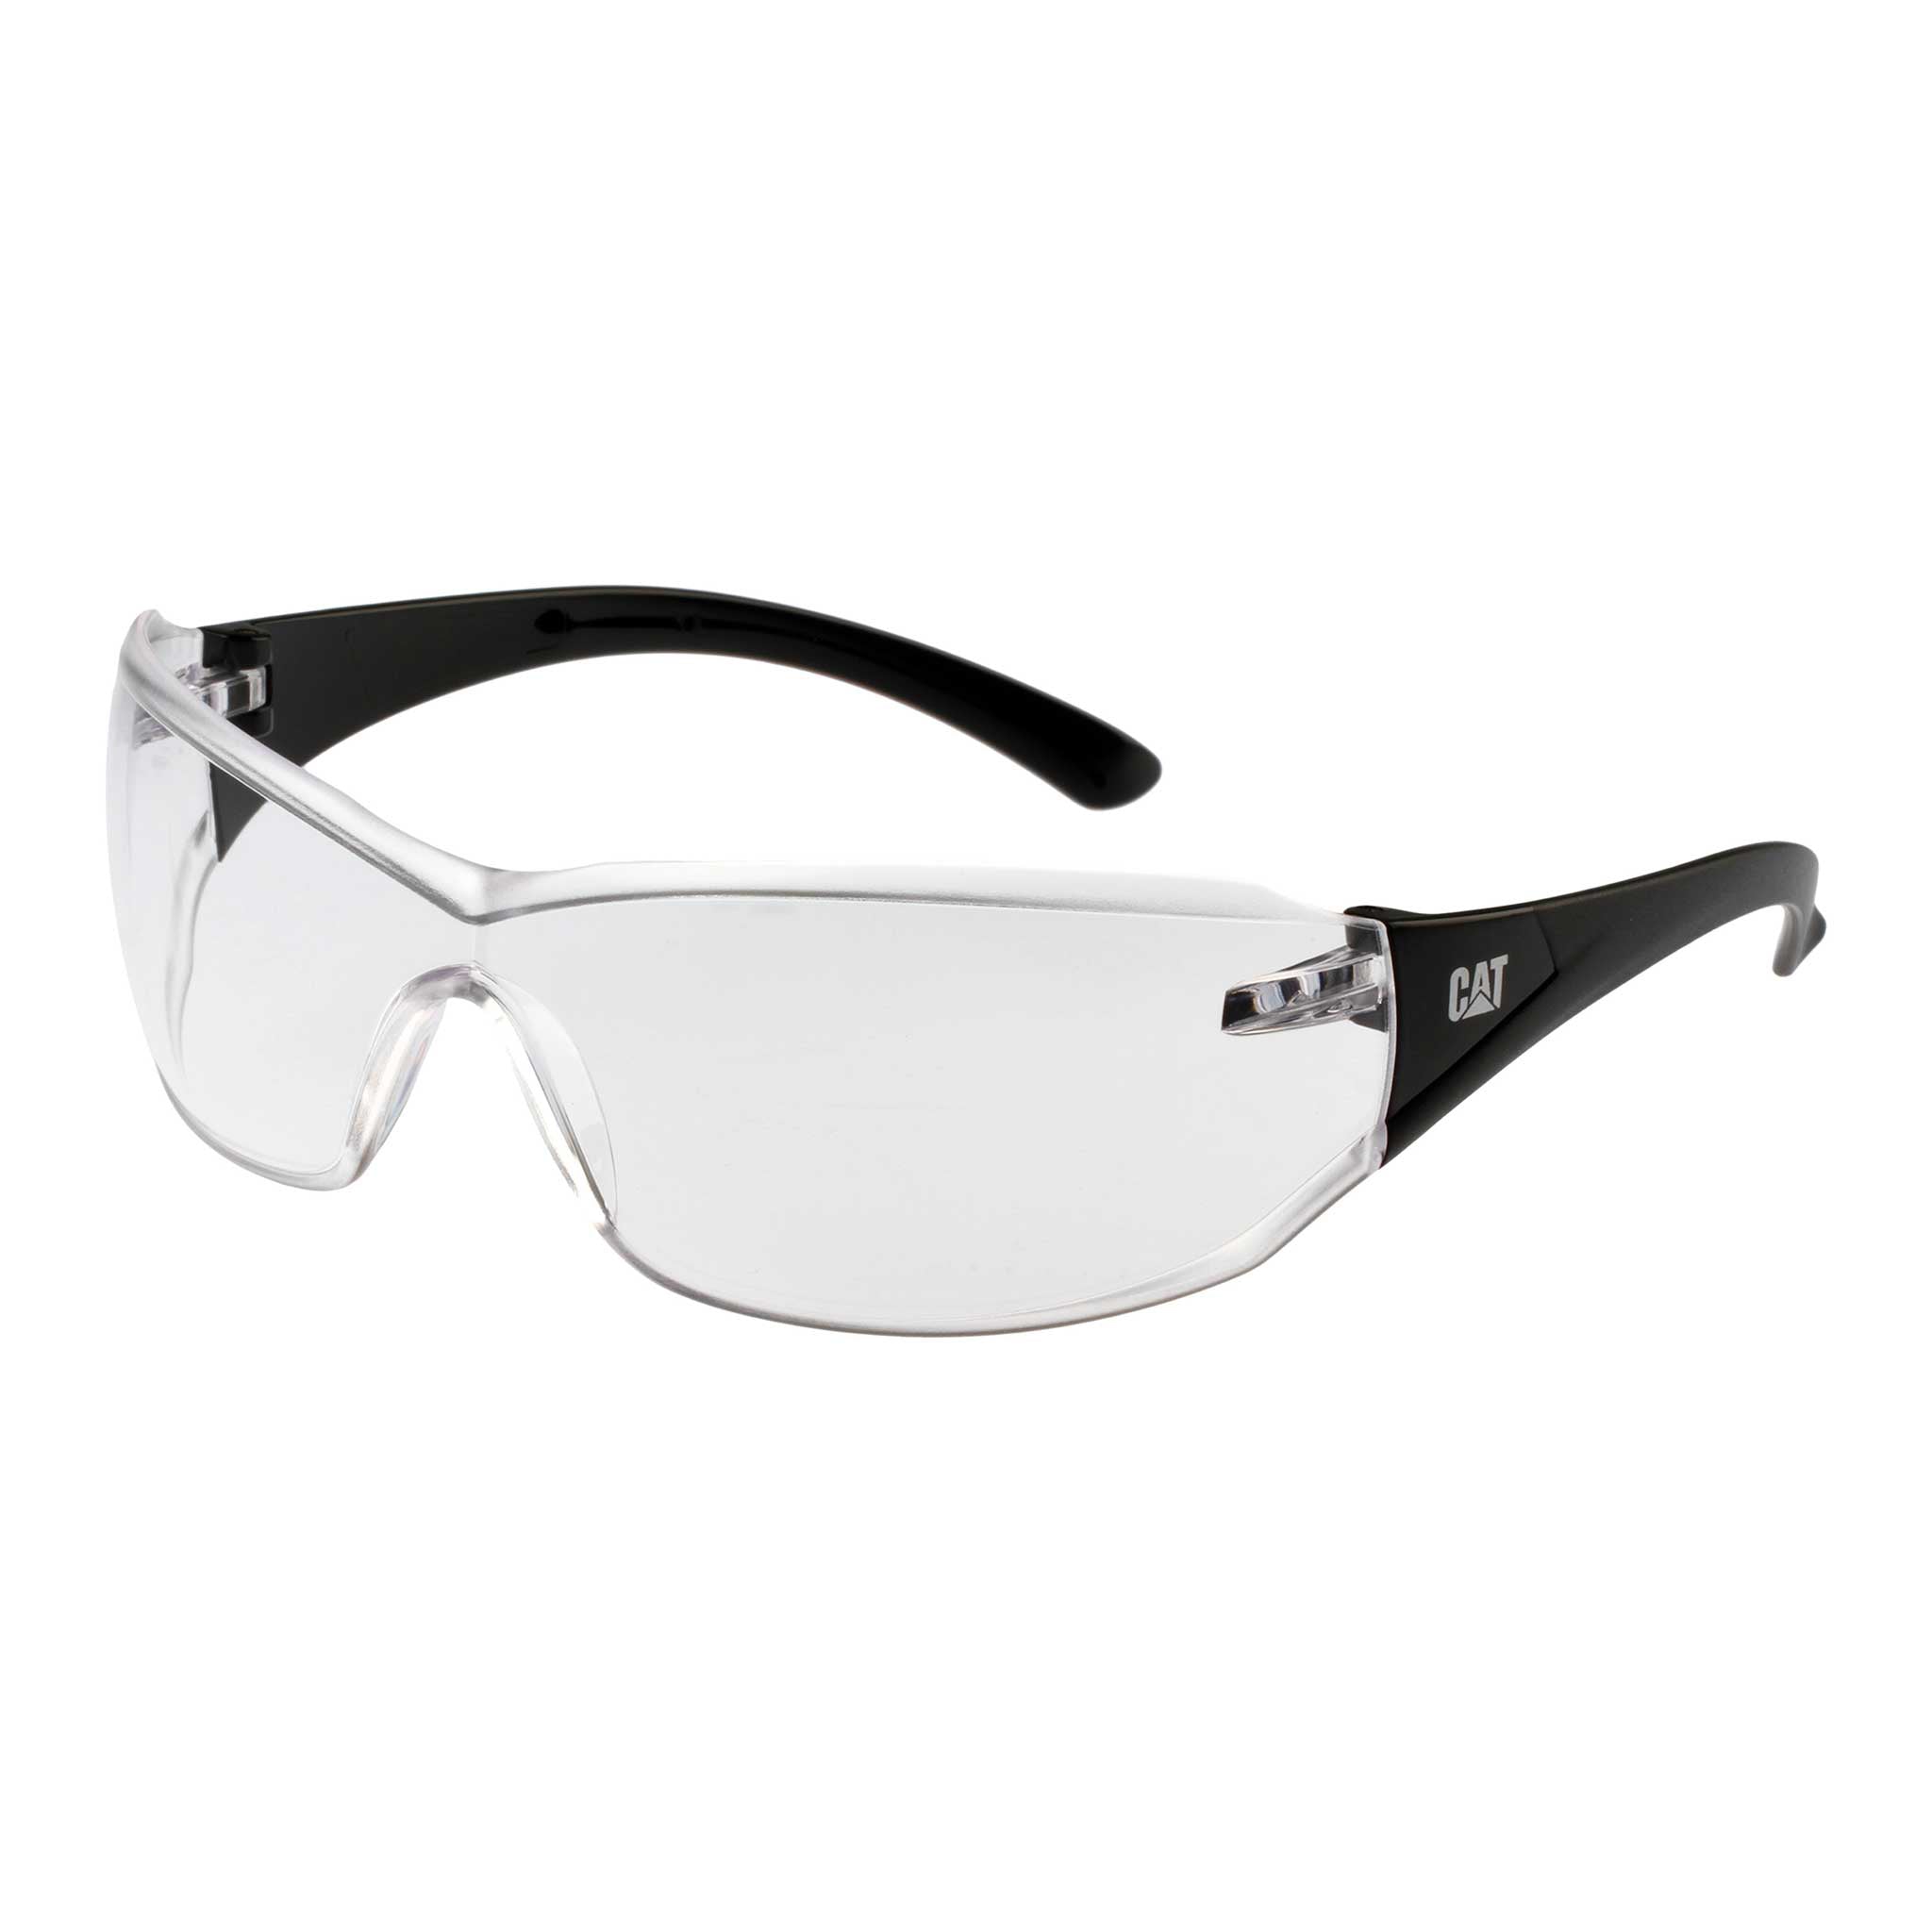 CAT Loader Safety Glasses - ANSI approved - RX Safety